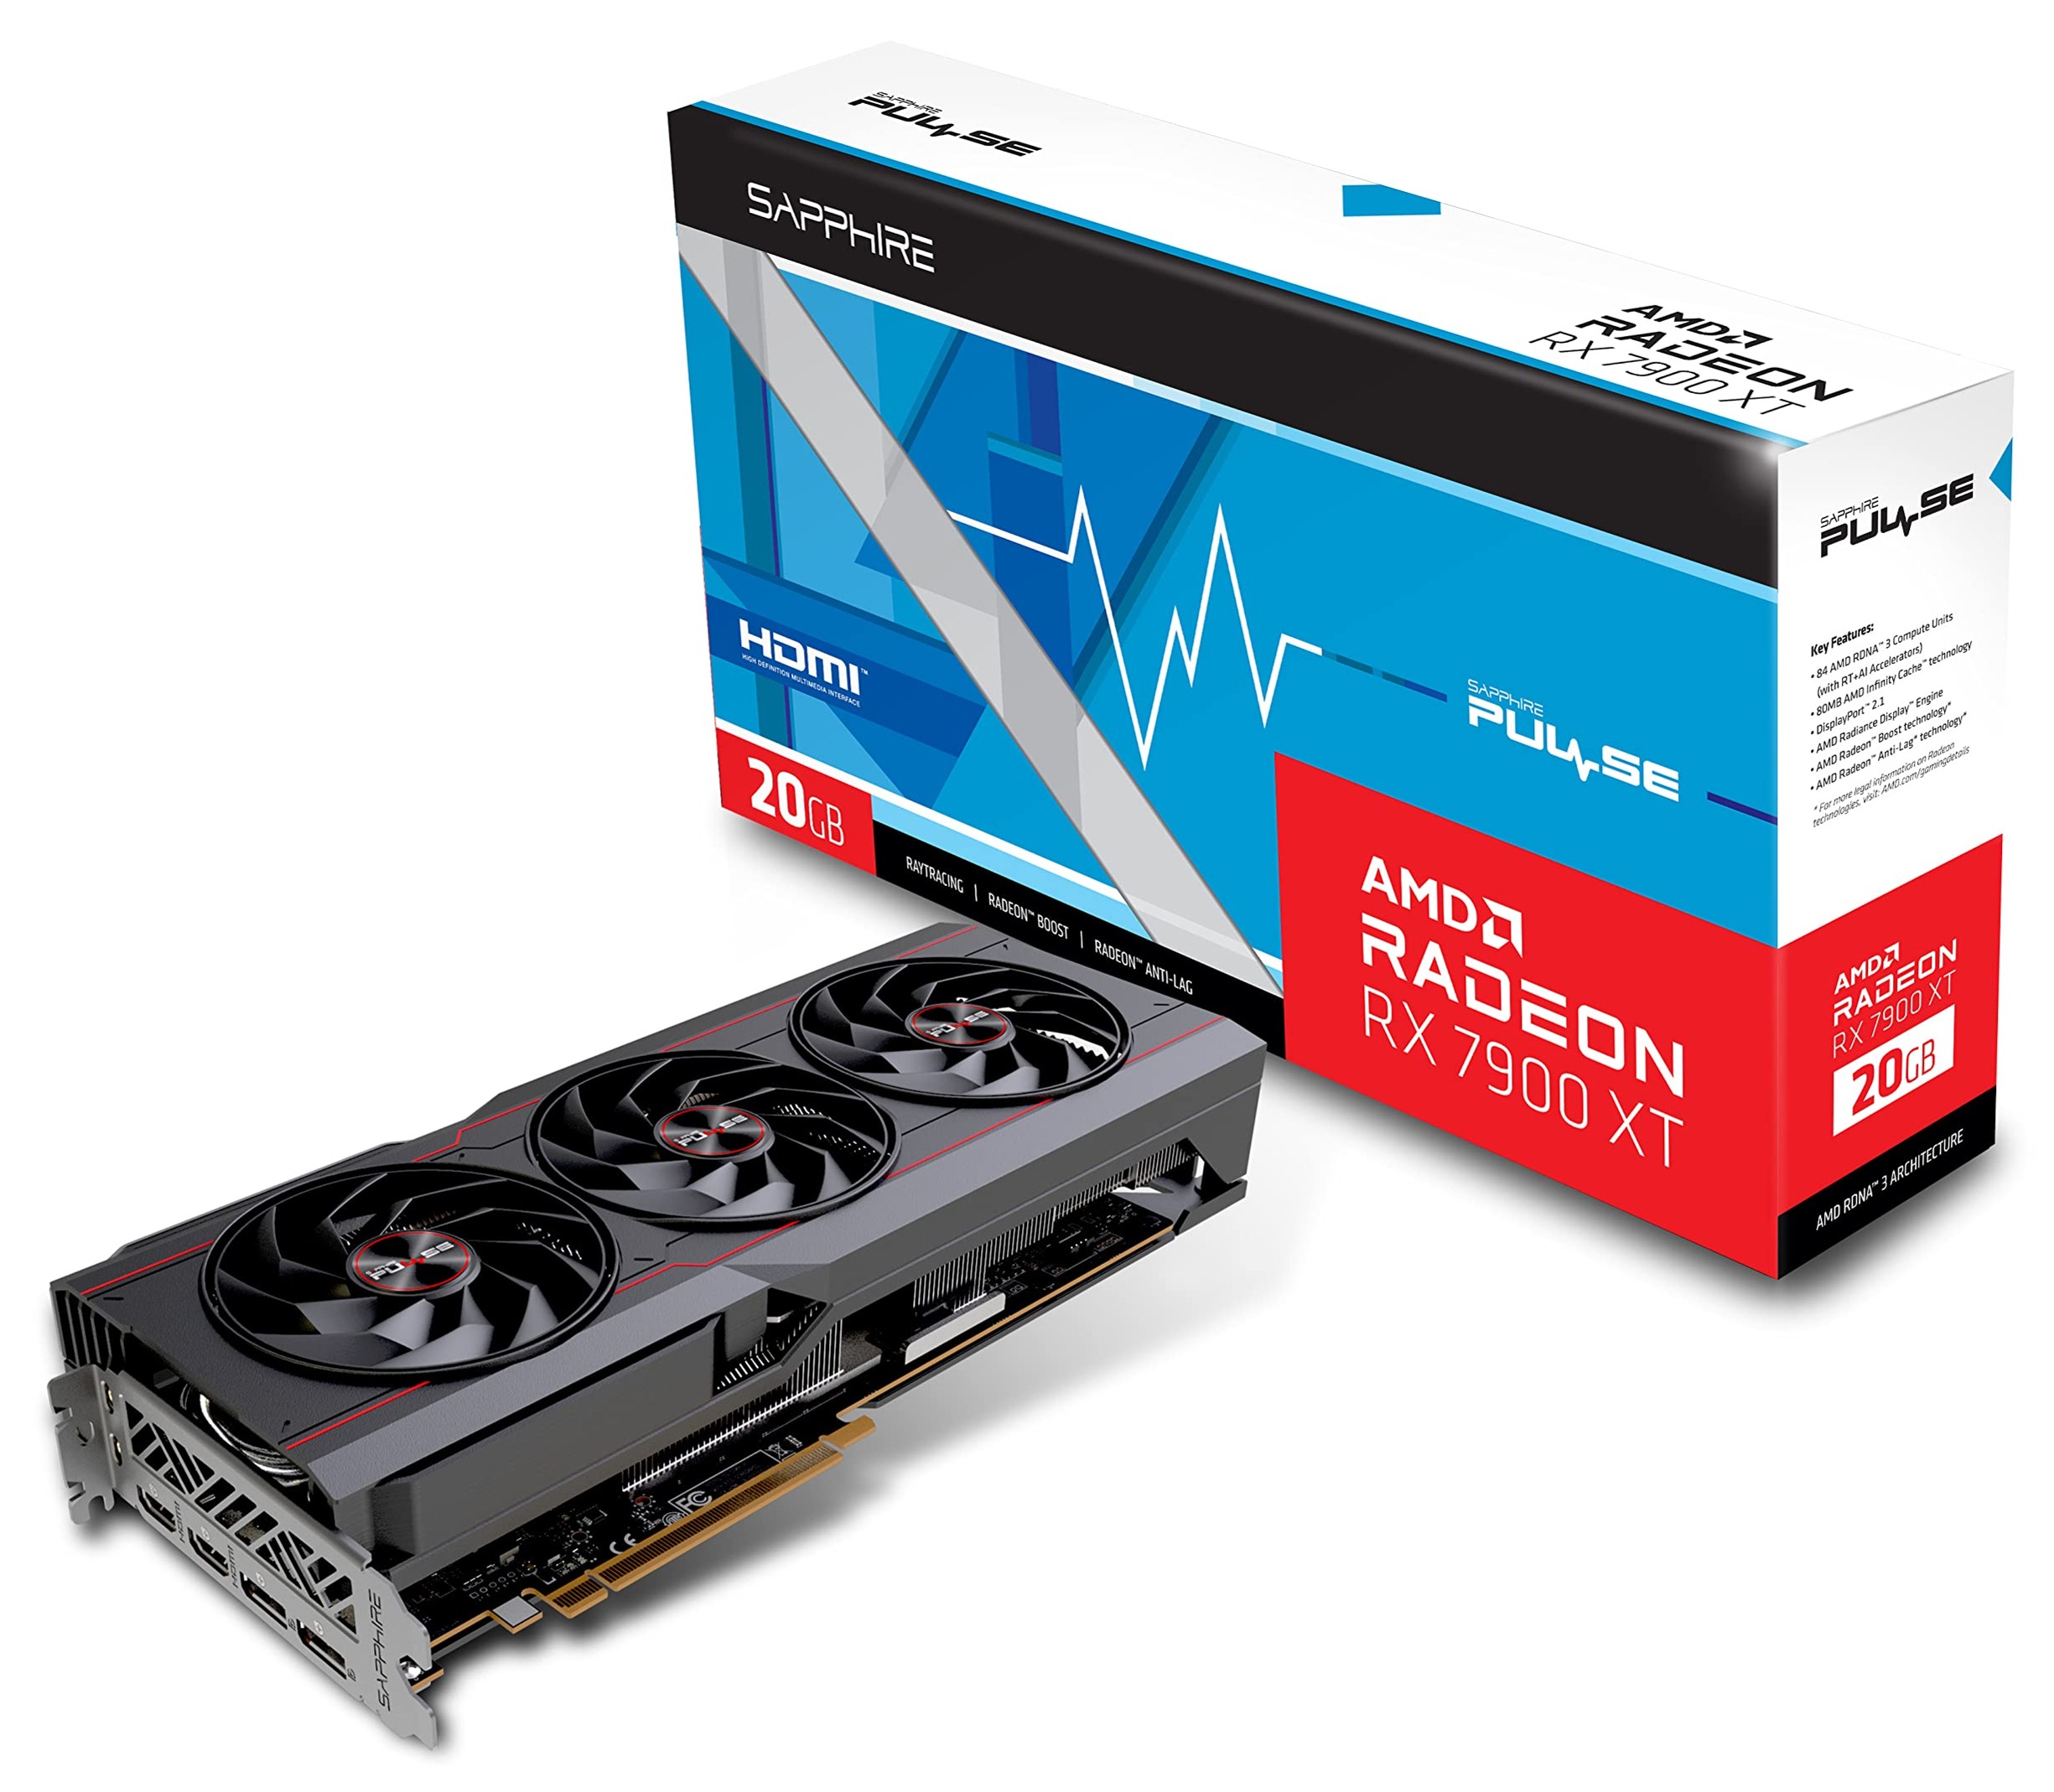 Sapphire Pulse AMD Radeon 7900 XT 20GB GDDR6 PCIe Gen 4 X16 Graphics Card @ $669.99 + F/S